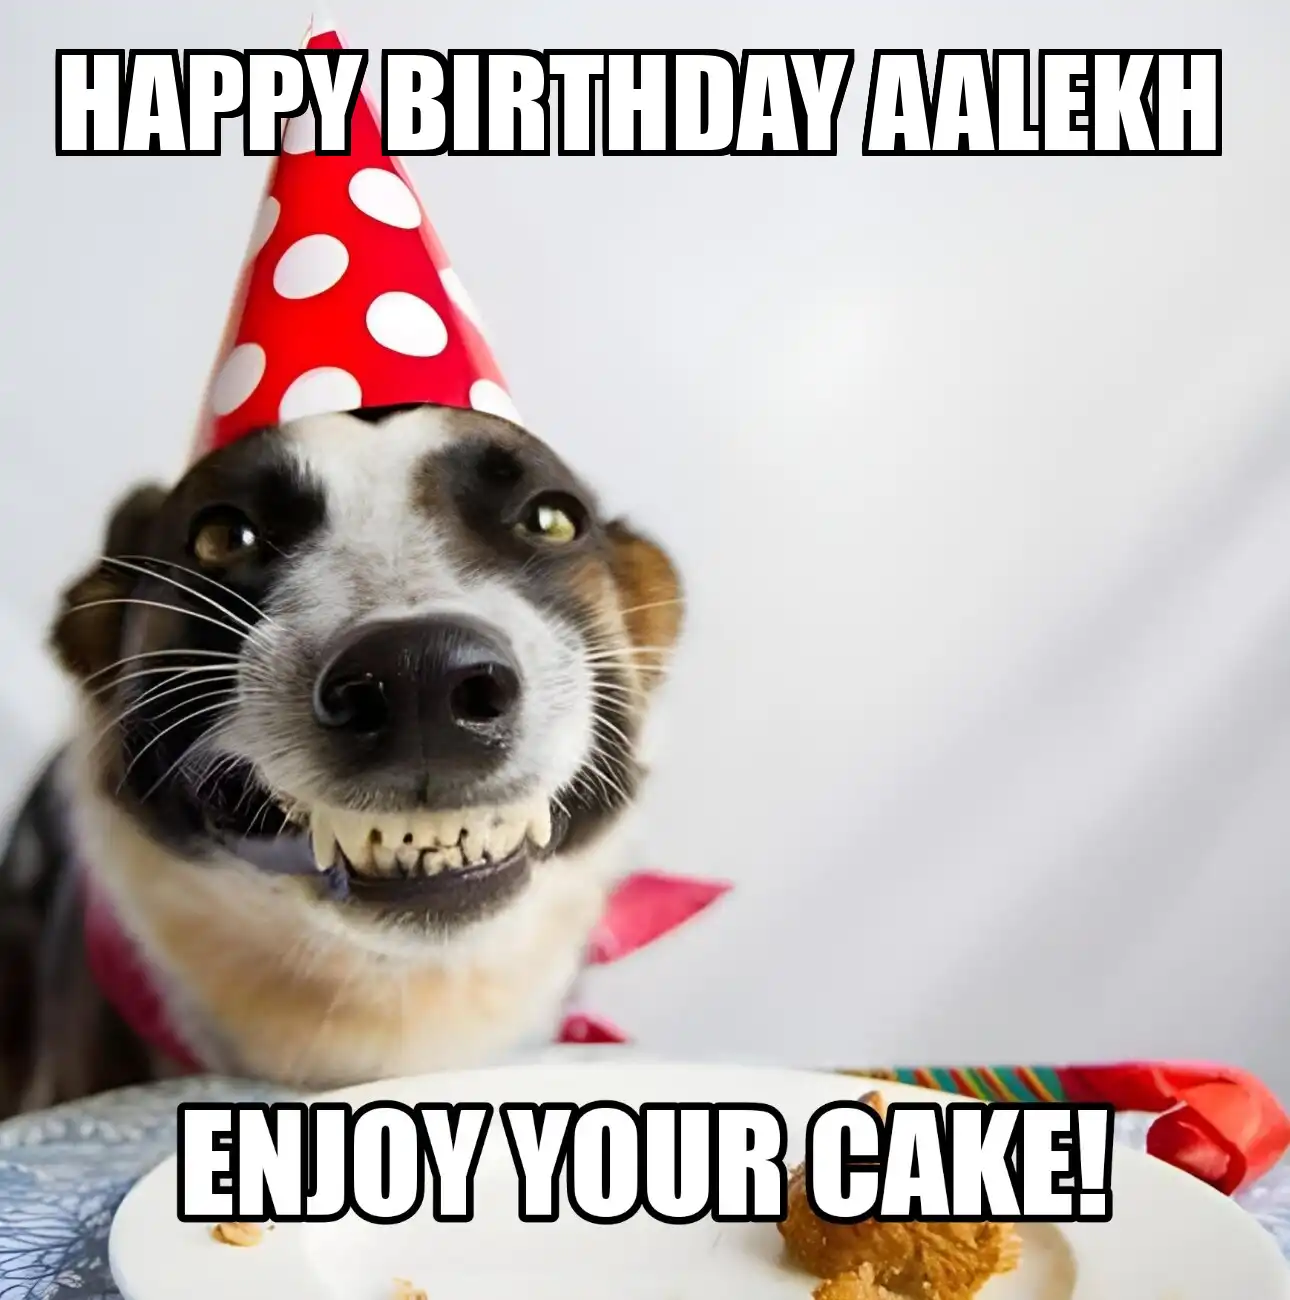 Happy Birthday Aalekh Enjoy Your Cake Dog Meme